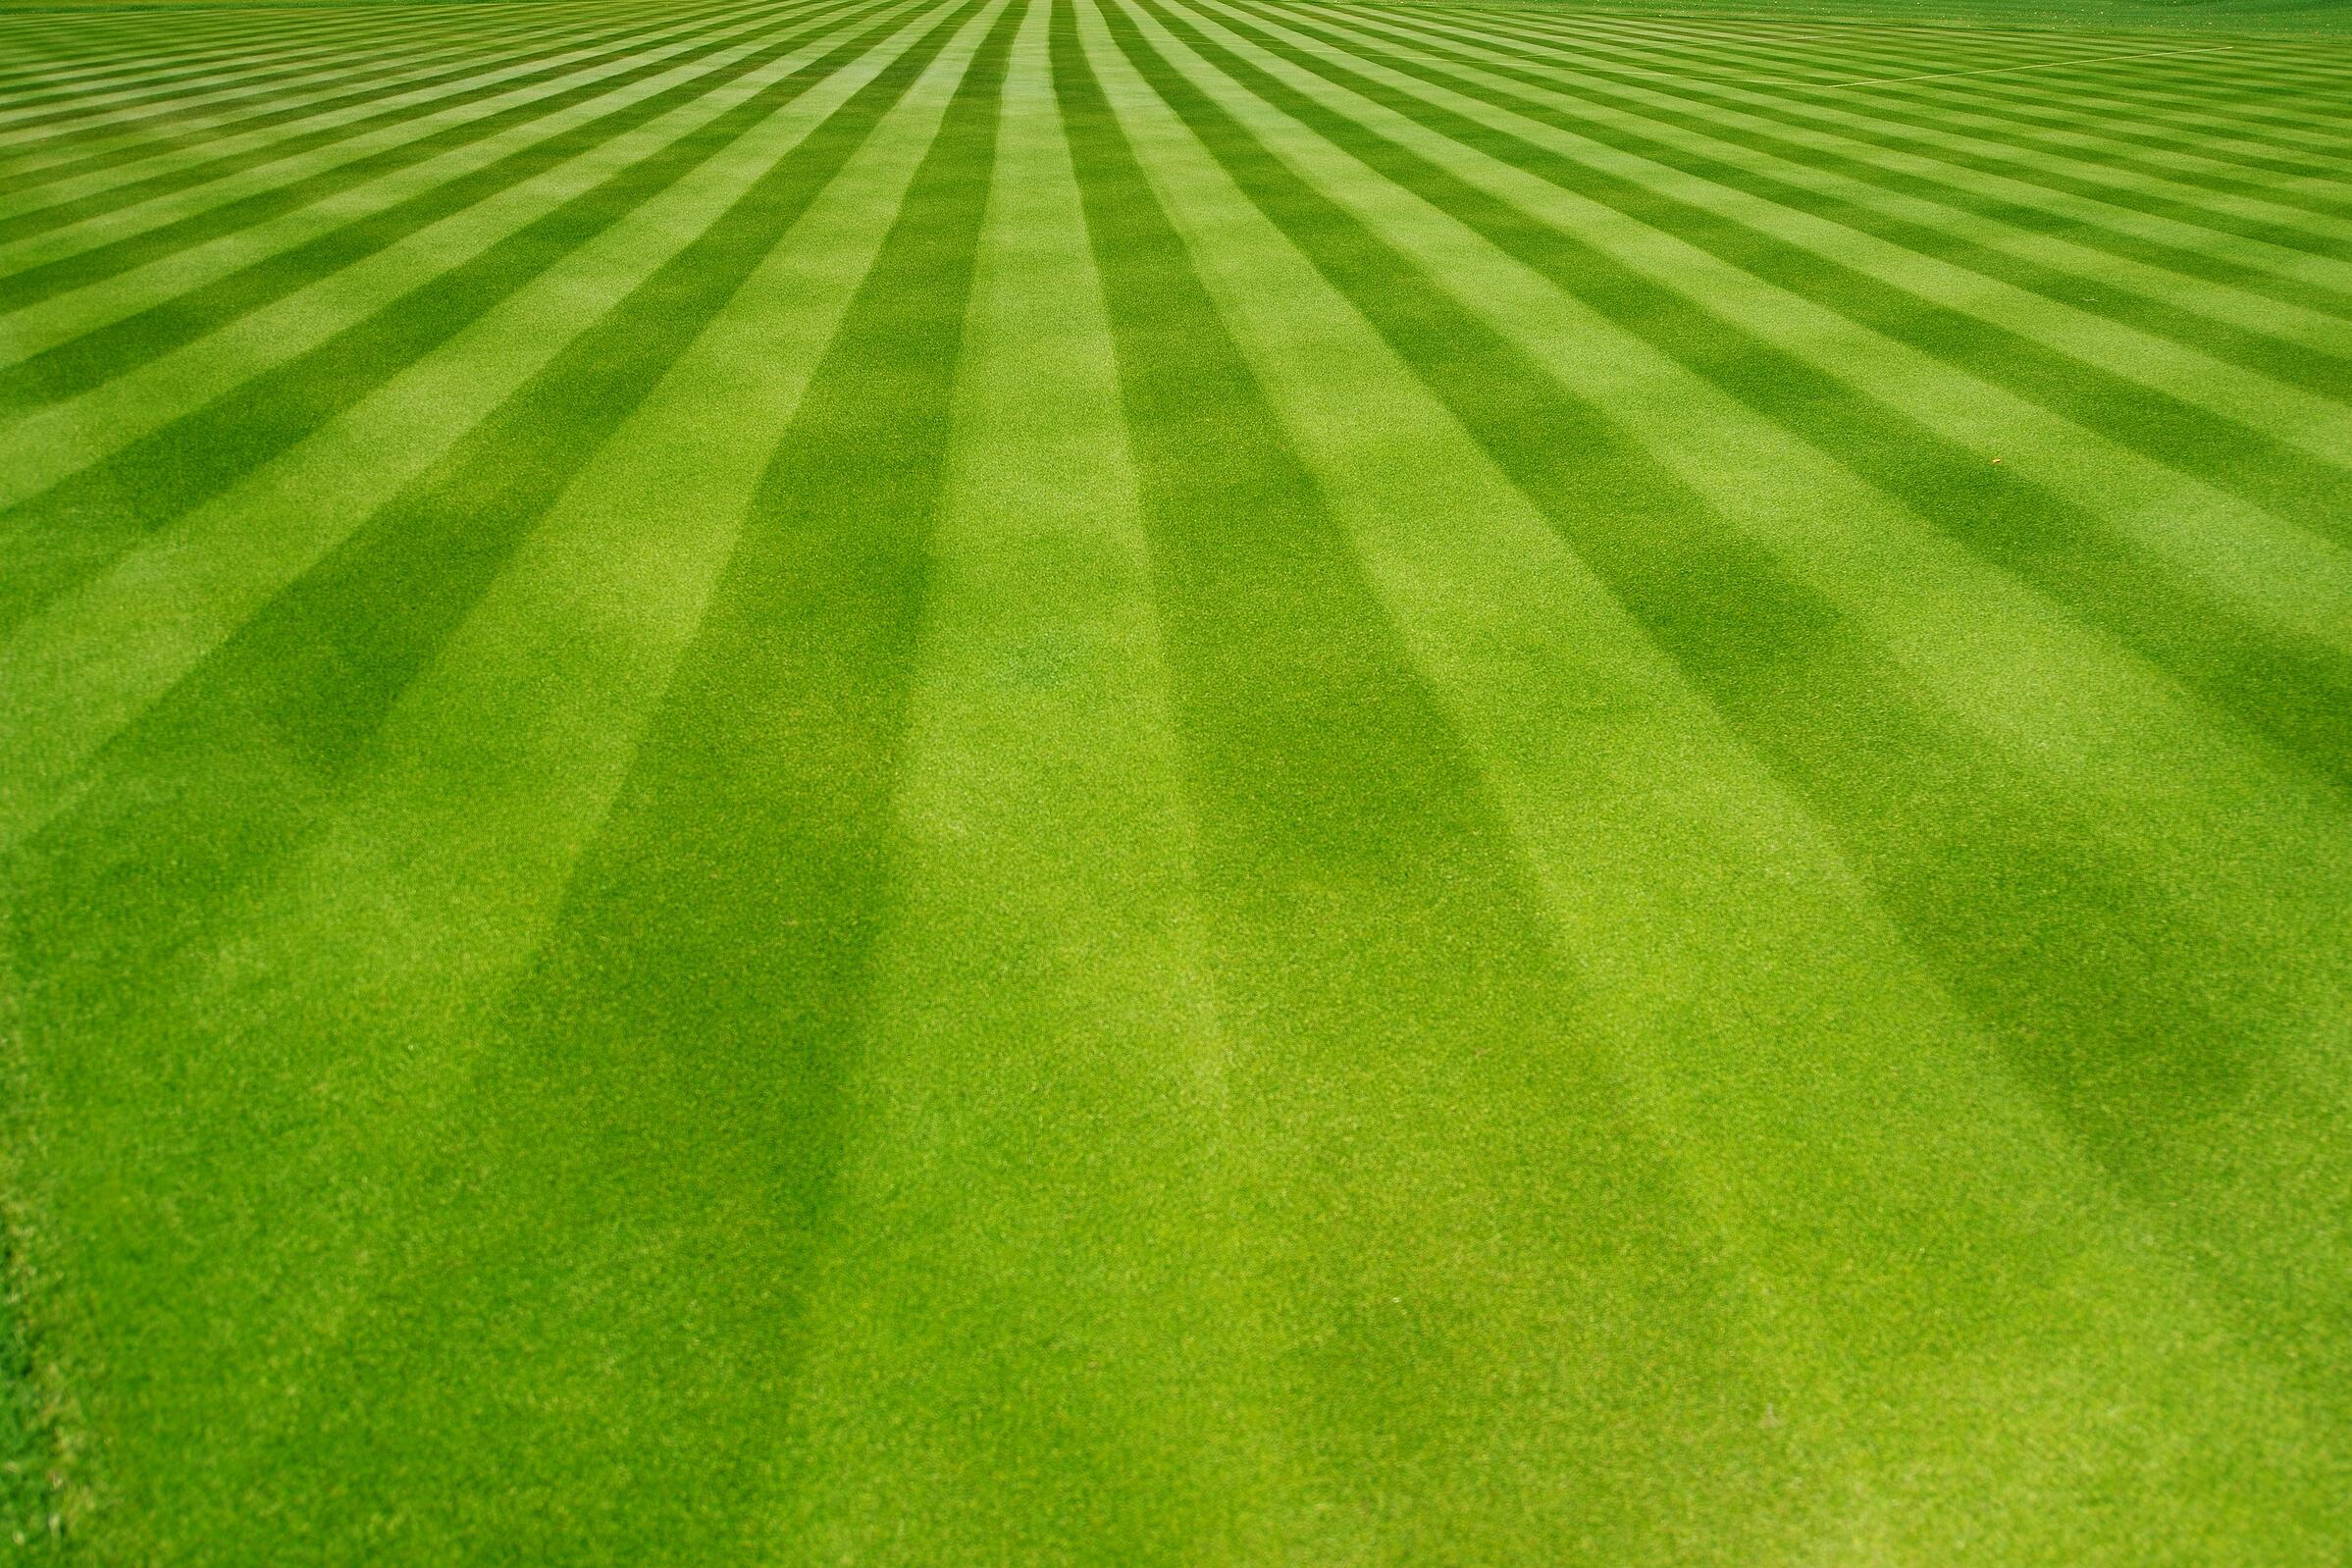 grass/lawn cutting